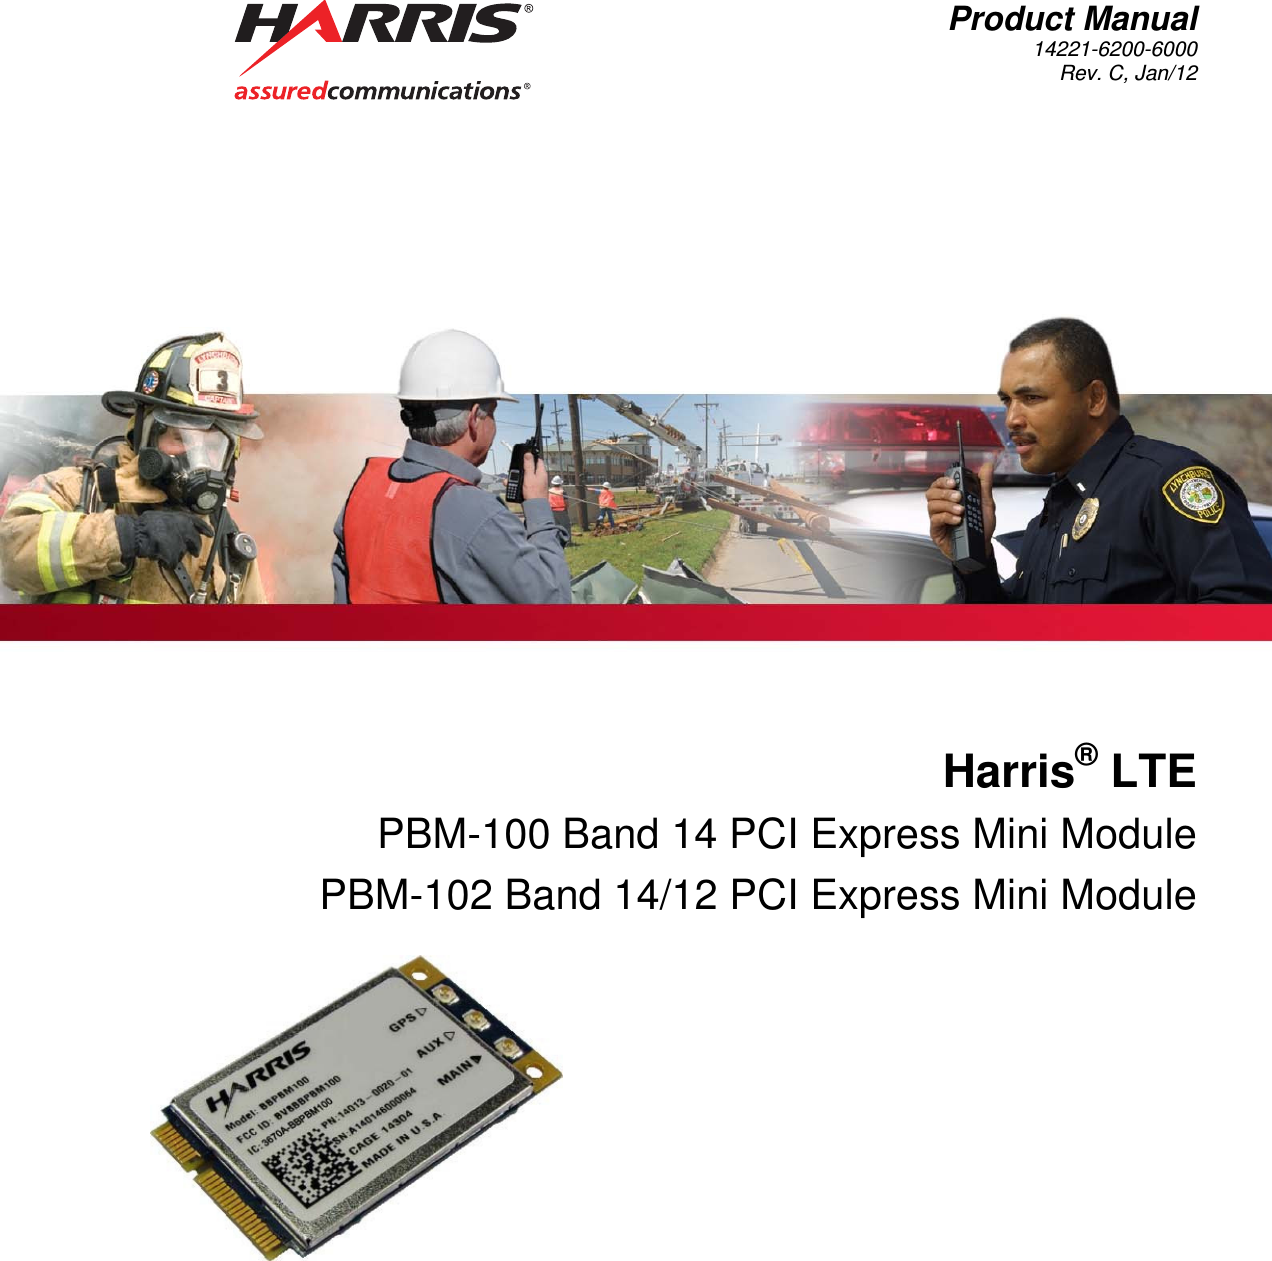 Product Manual14221-6200-6000 Rev. C, Jan/12  Harris® LTE PBM-100 Band 14 PCI Express Mini Module PBM-102 Band 14/12 PCI Express Mini Module   